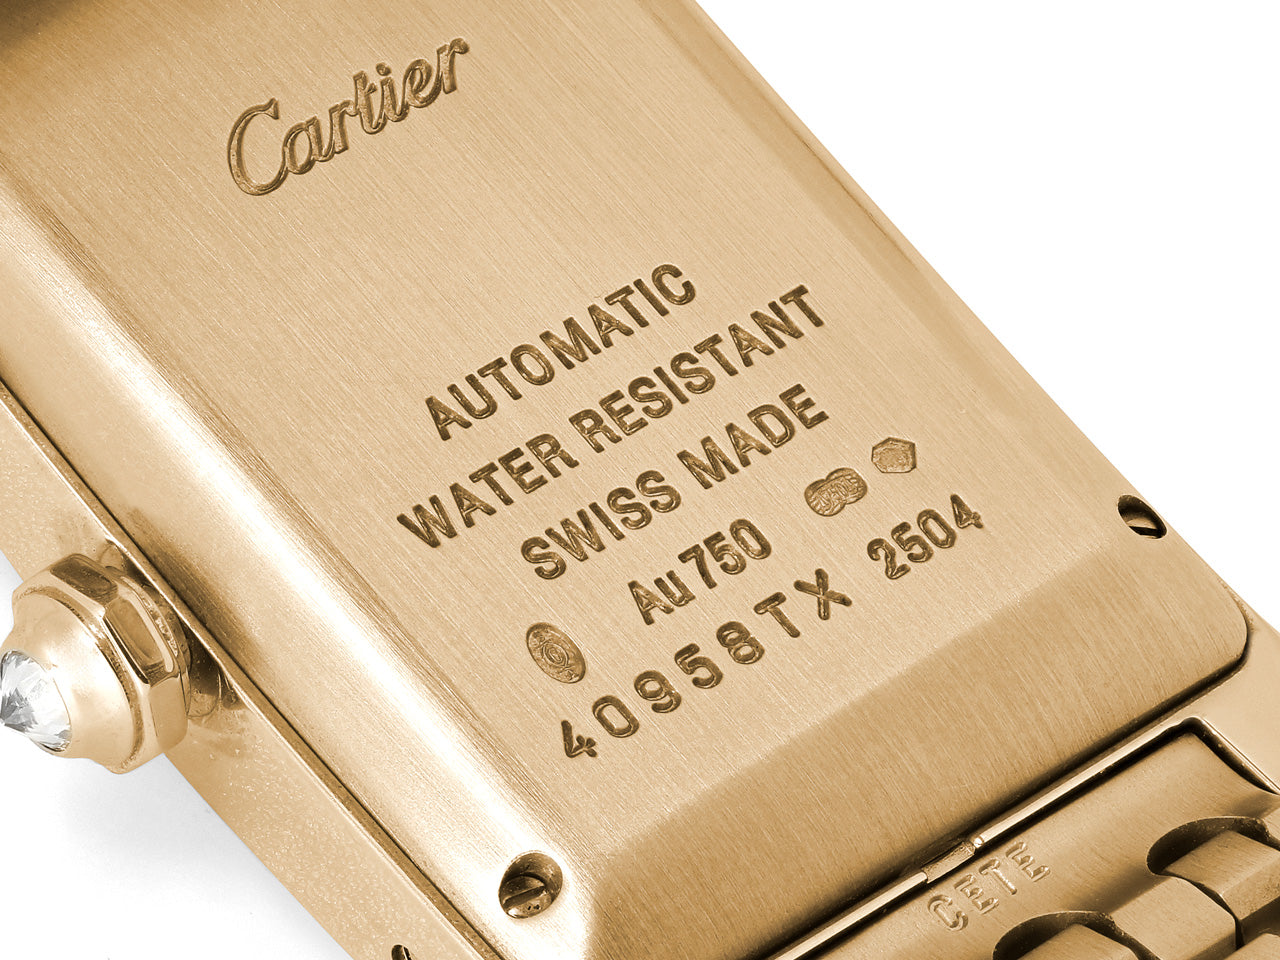 Cartier Tank Américaine LM Watch in 18K Rose Gold